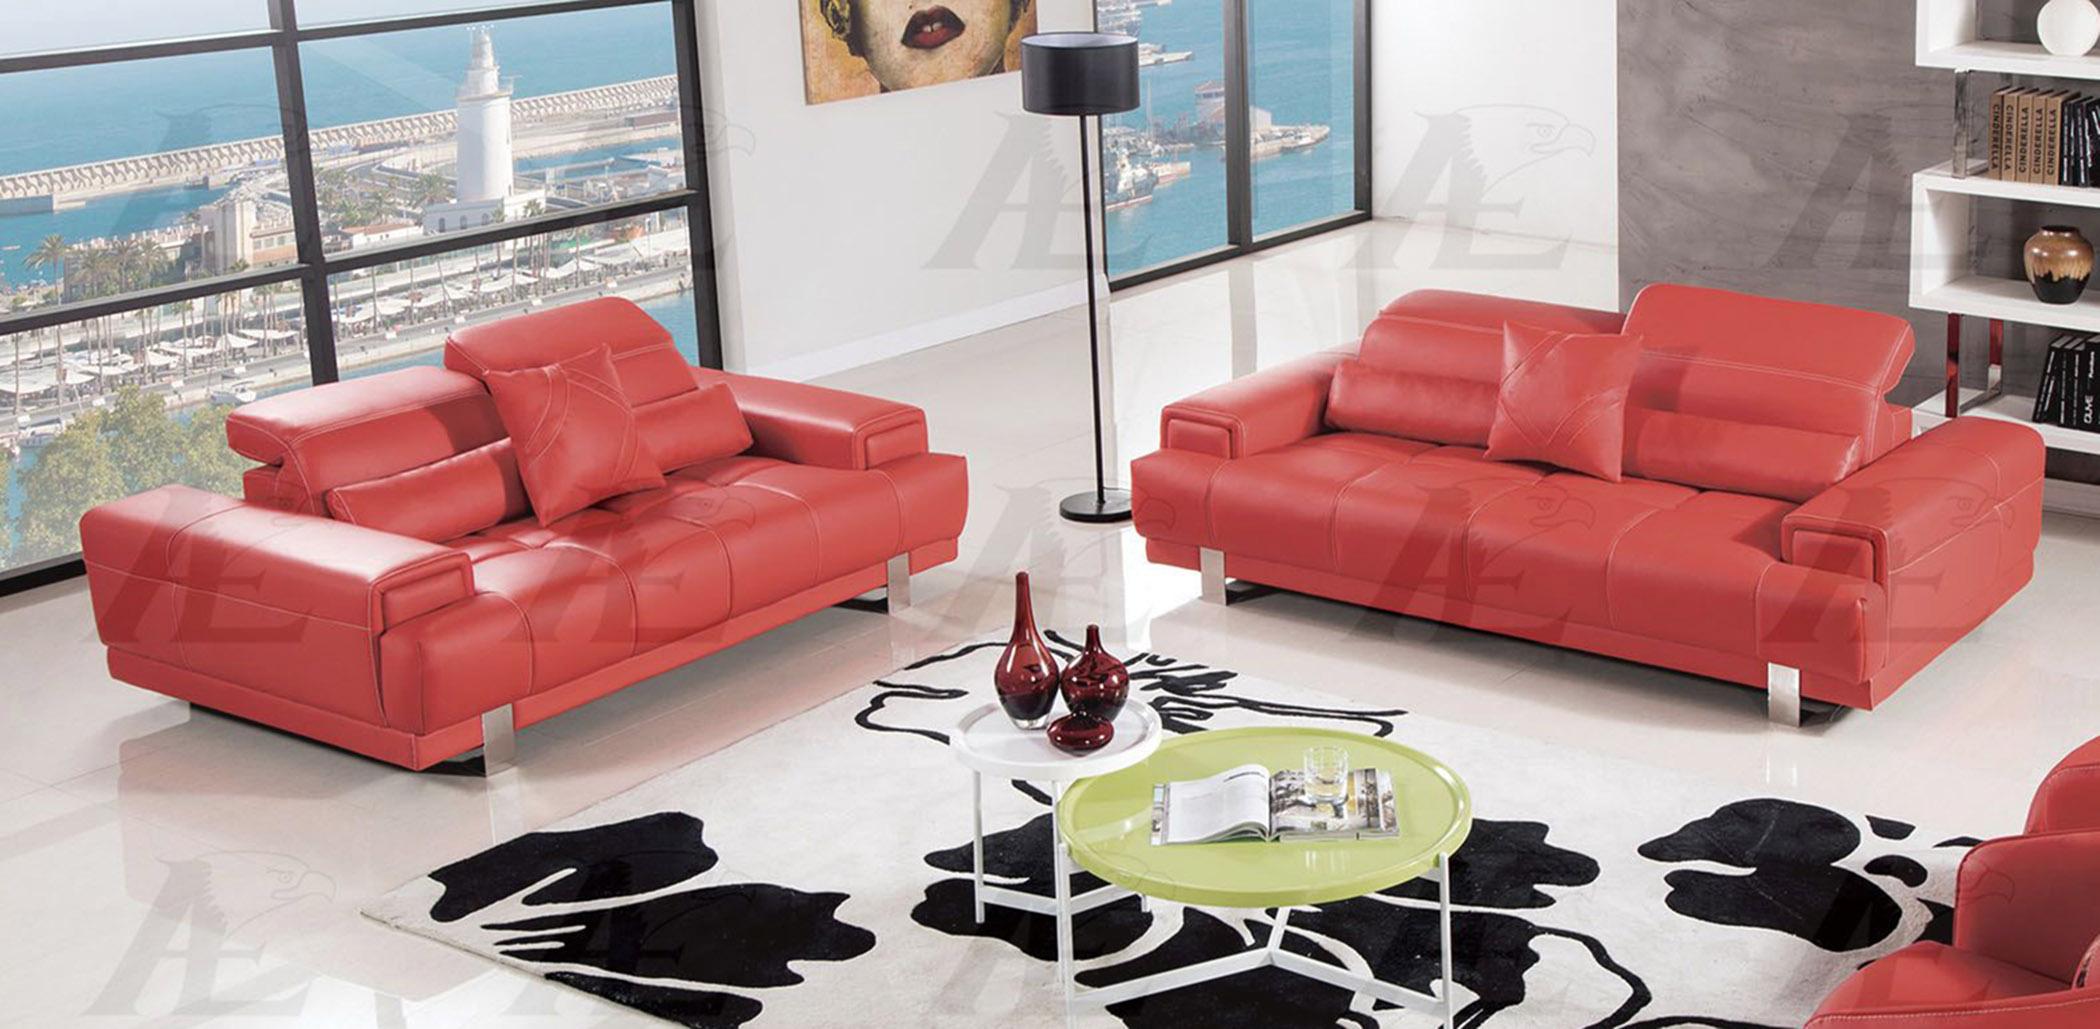 American Eagle Furniture AE606-RED Sofa and Loveseat Set